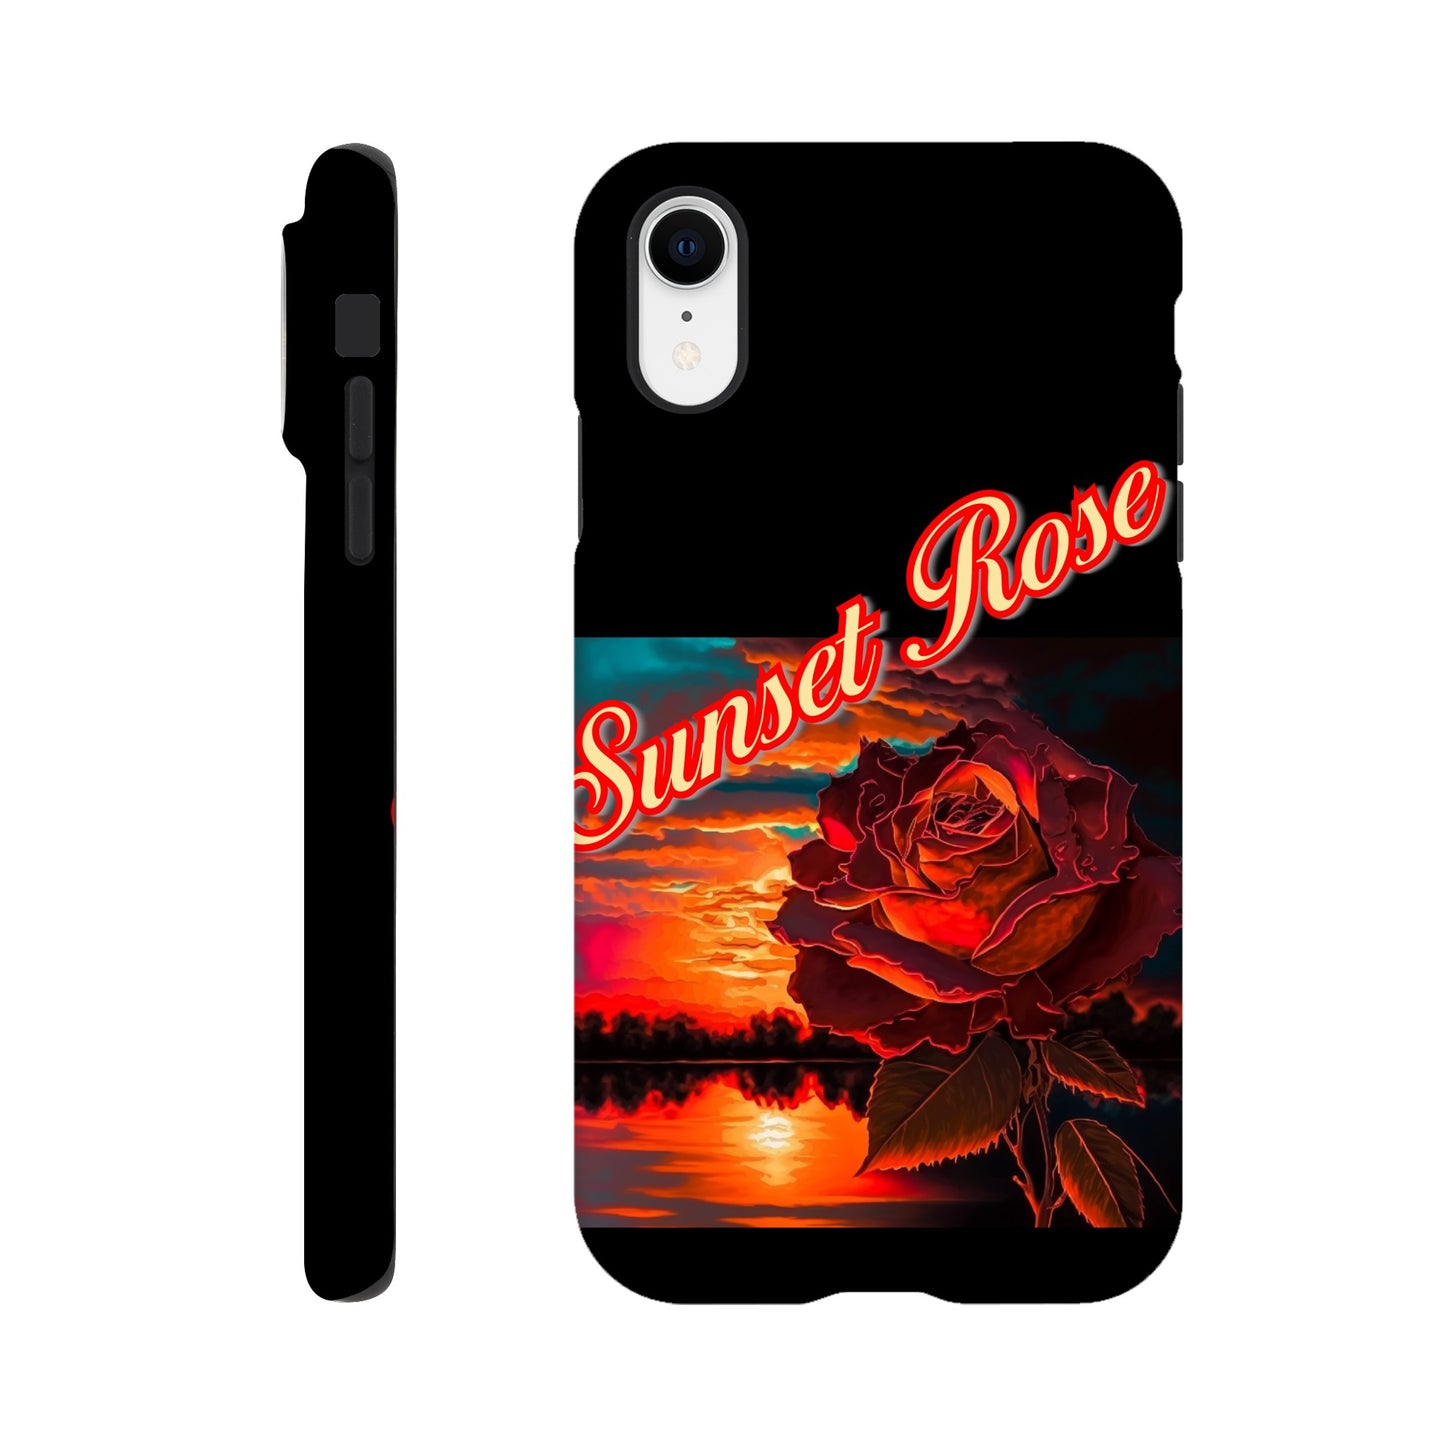 Sunset Rose Tough case